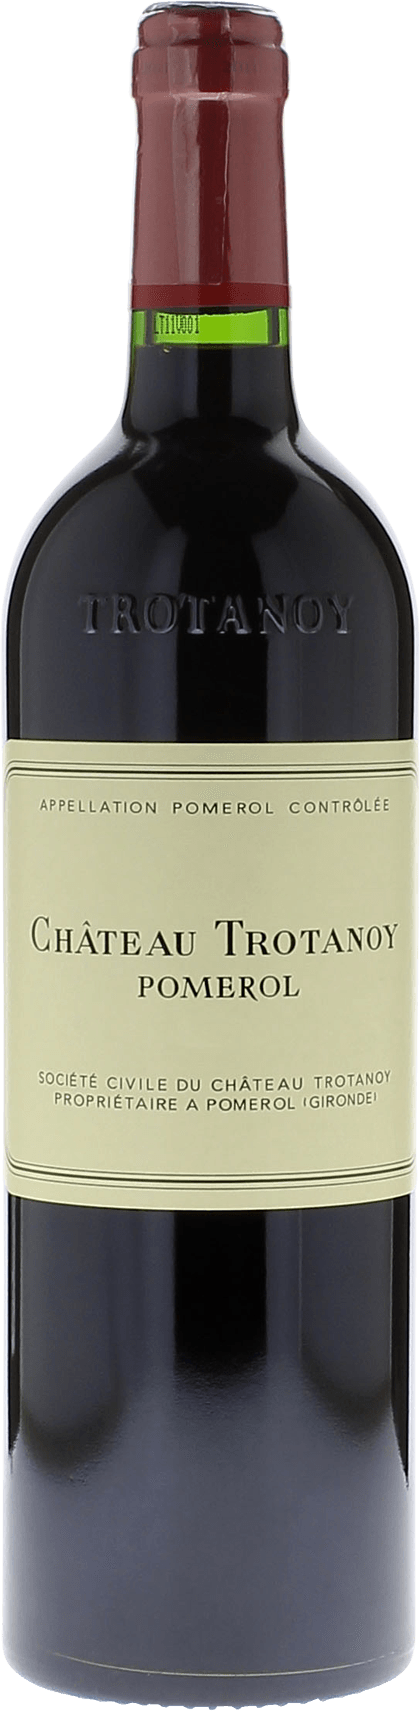 Trotanoy 1986  Pomerol, Bordeaux rouge